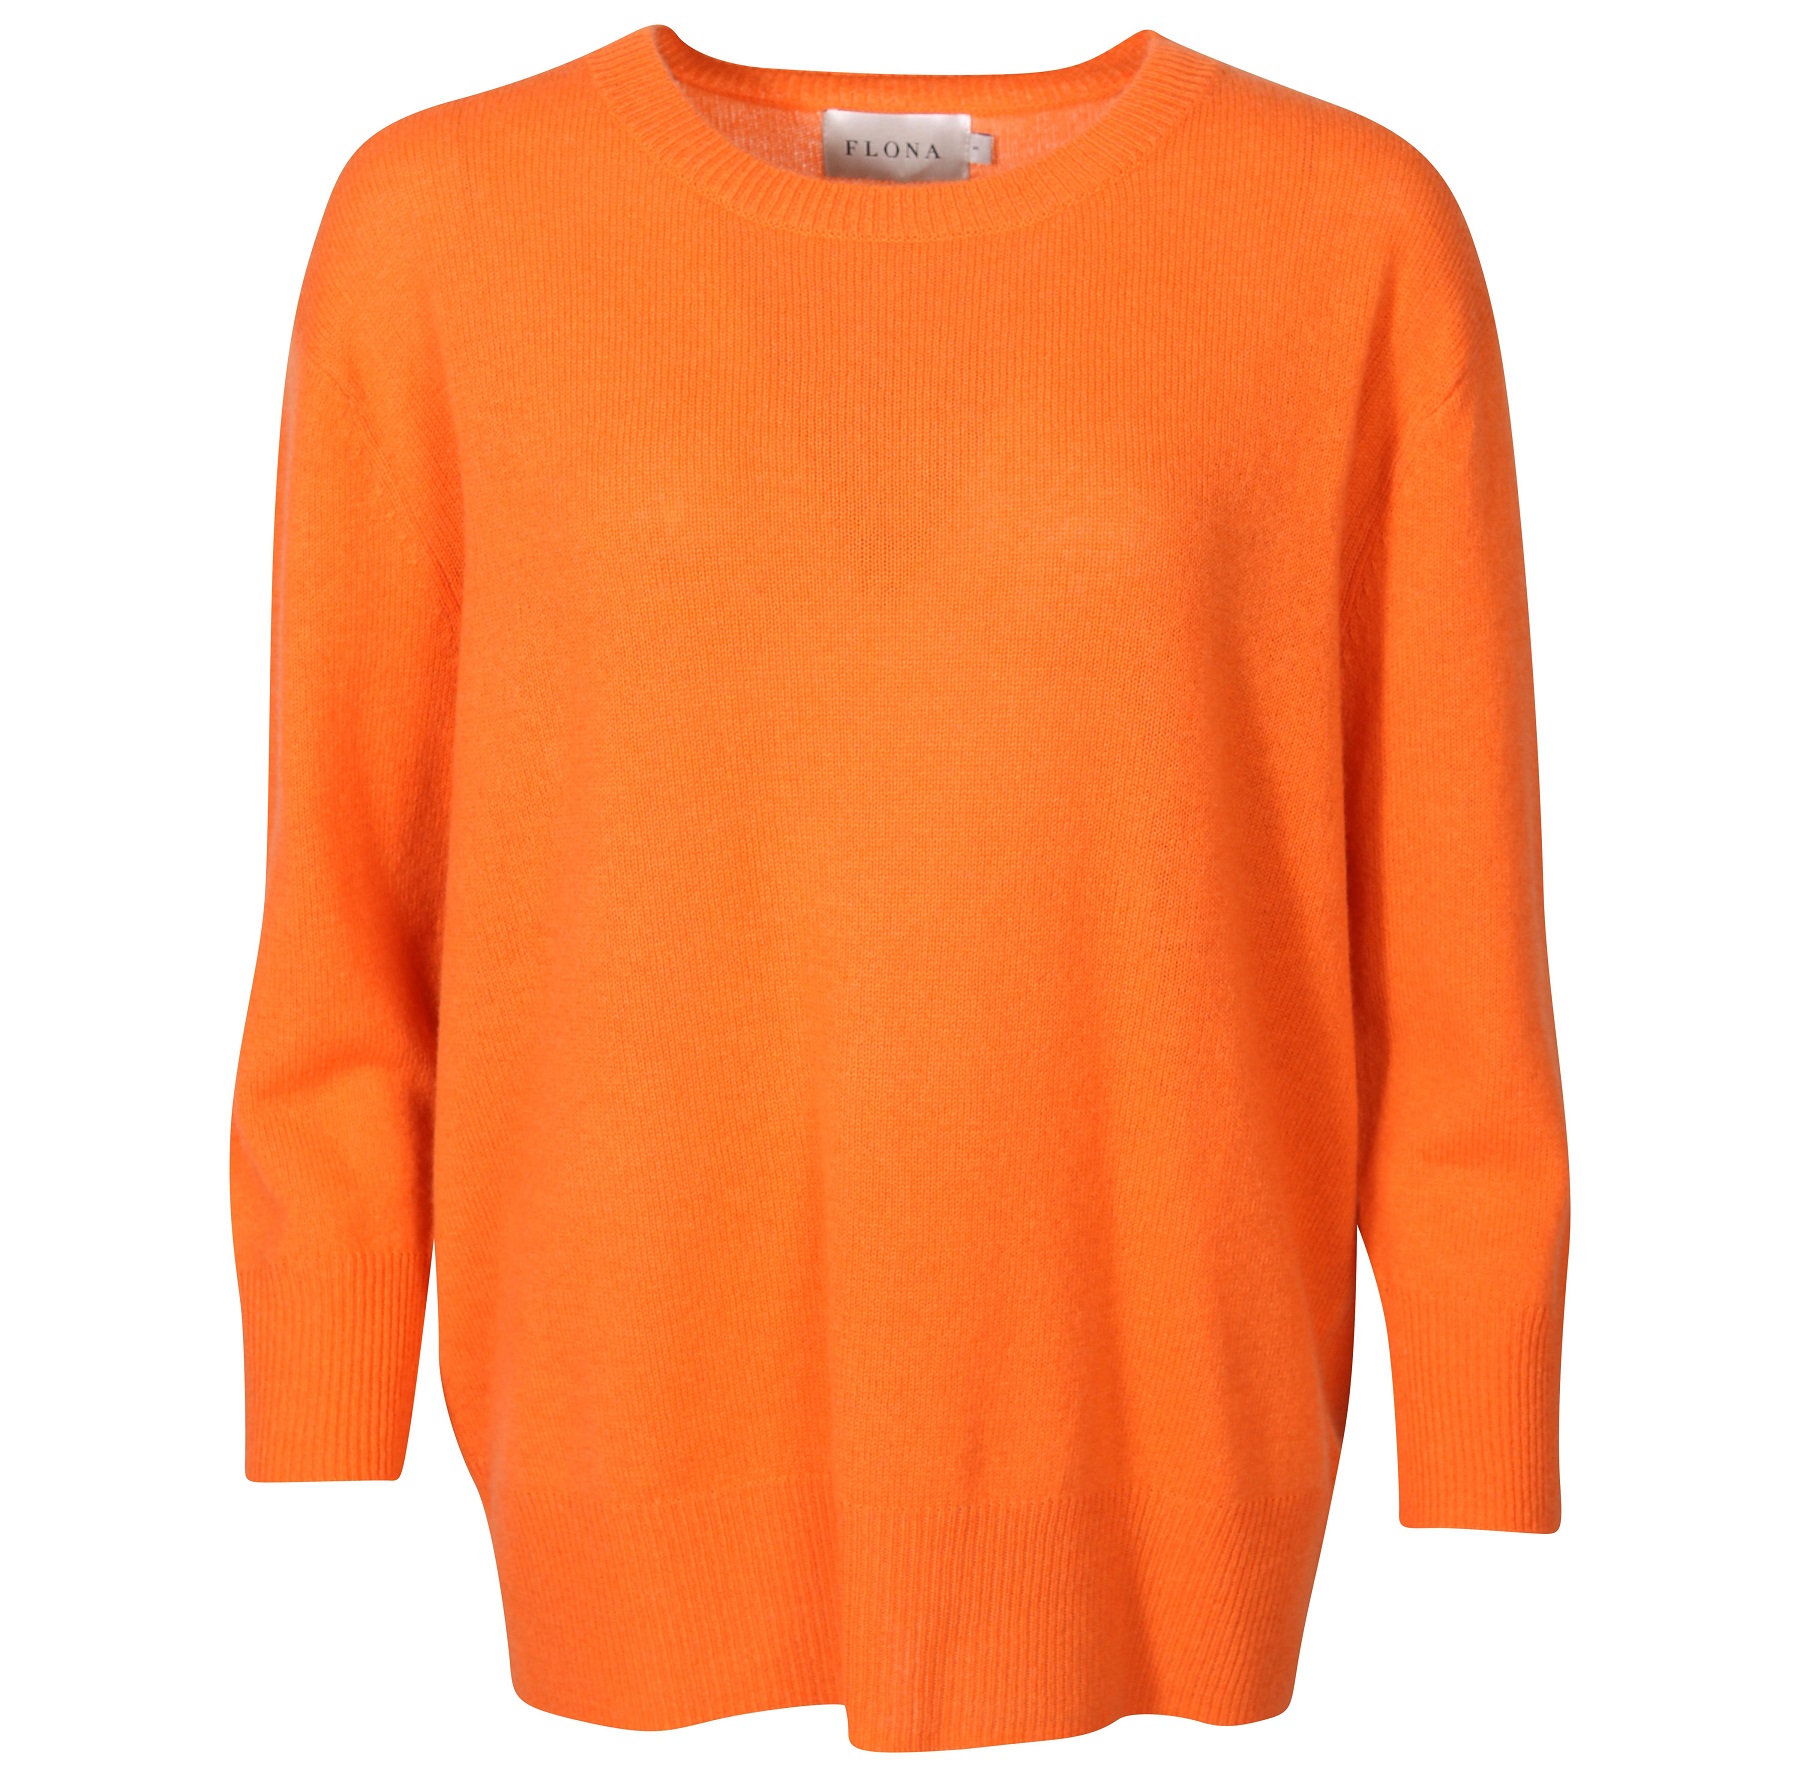 FLONA Cashmere Pullover in Orange XS